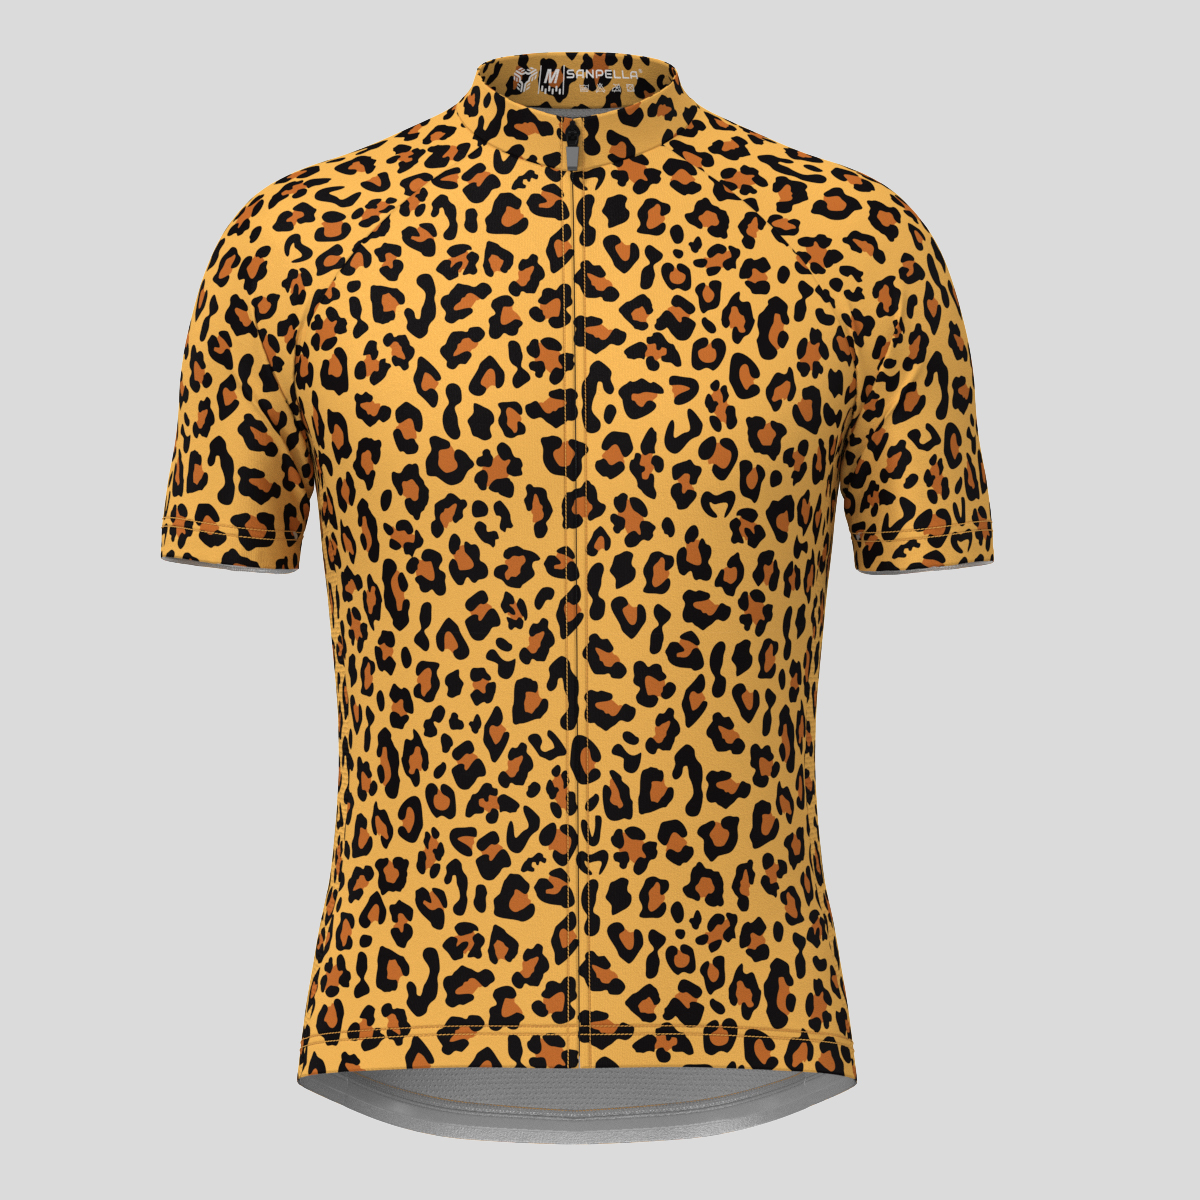 Leopard Print Men's Cycling Jersey -  Brown